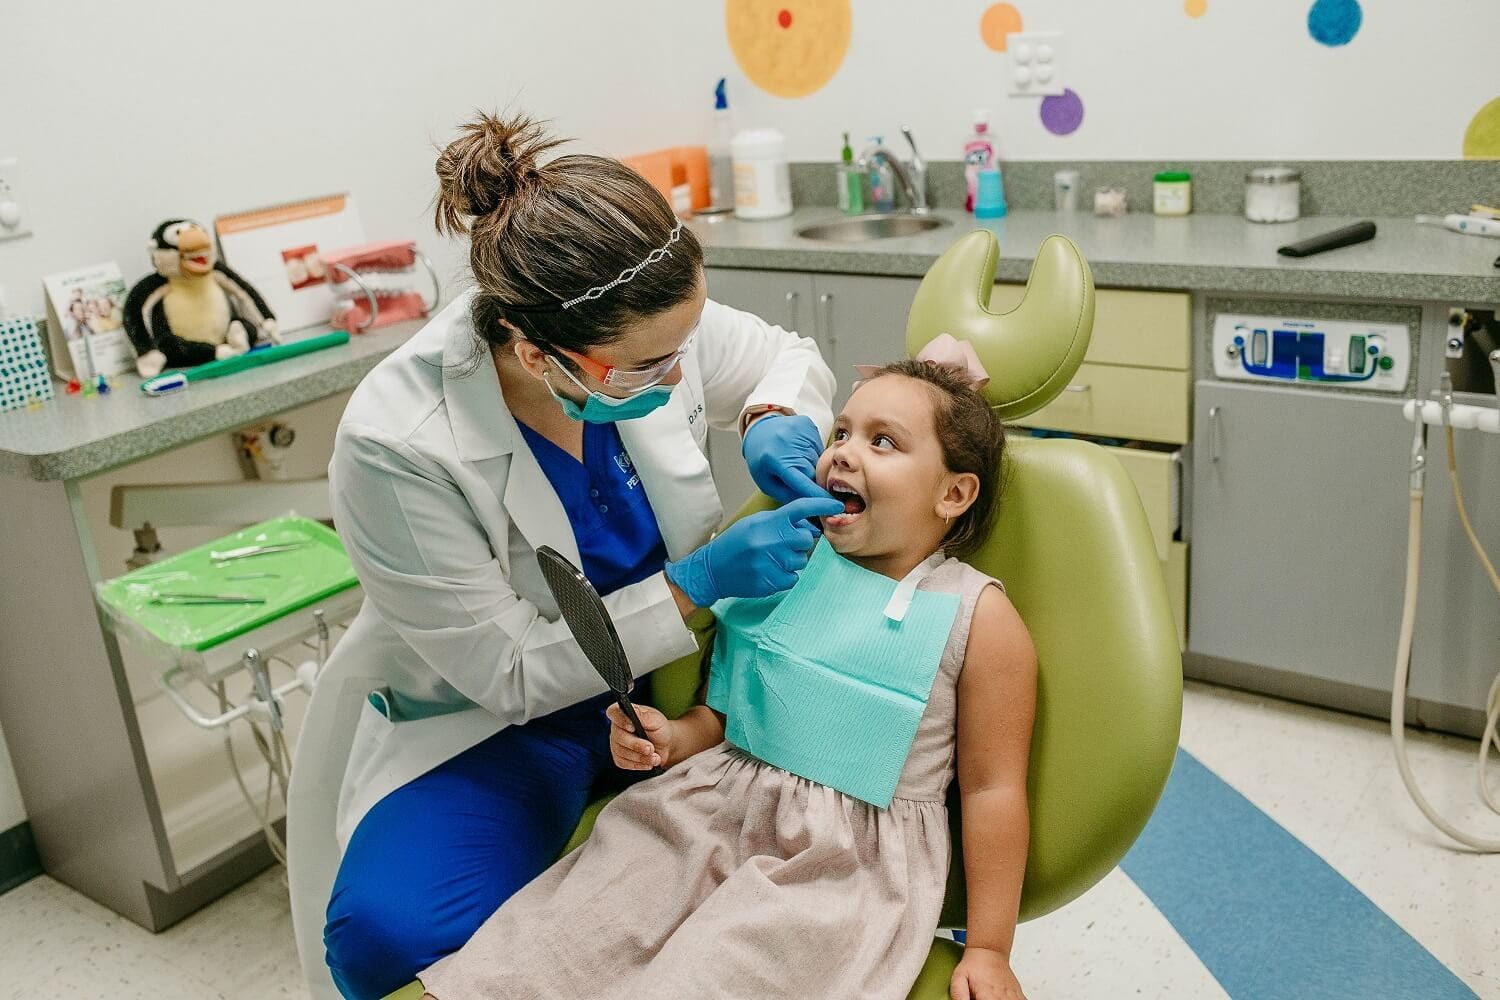 Dentist check kid's teeth